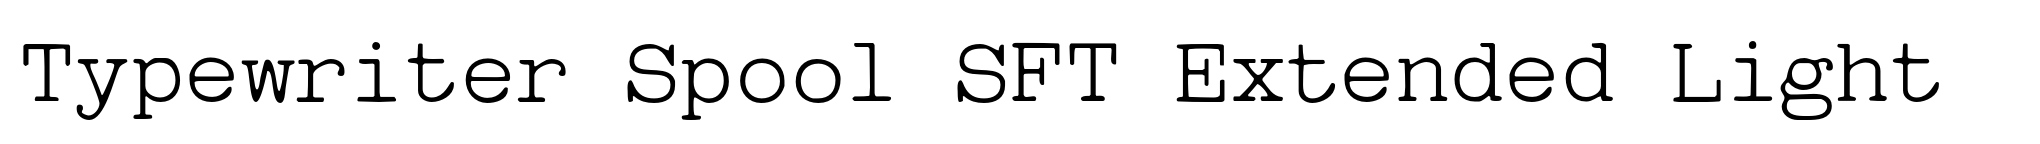 Typewriter Spool SFT Extended Light image